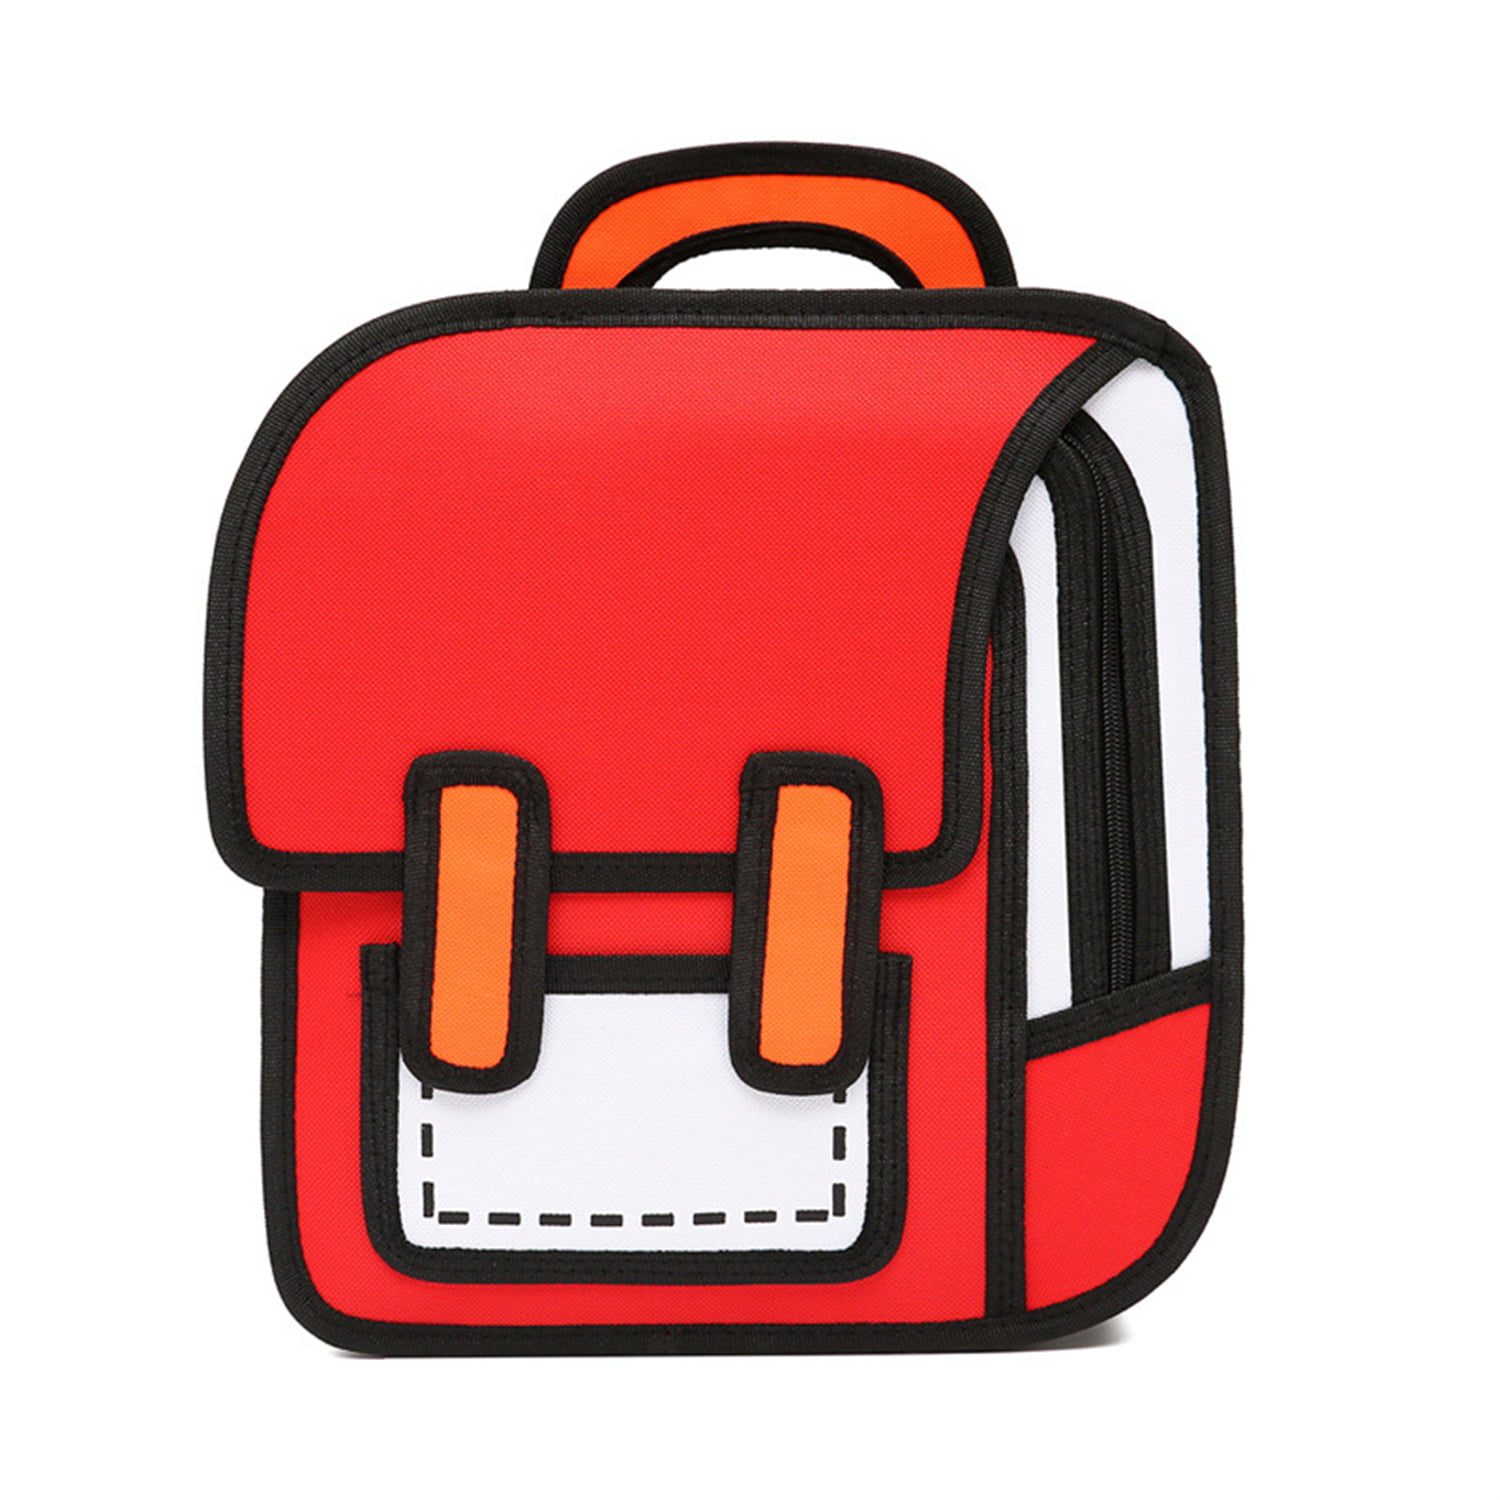 Mini Cartoon Graffiti Backpack Purse, Multi Functional Shoulder